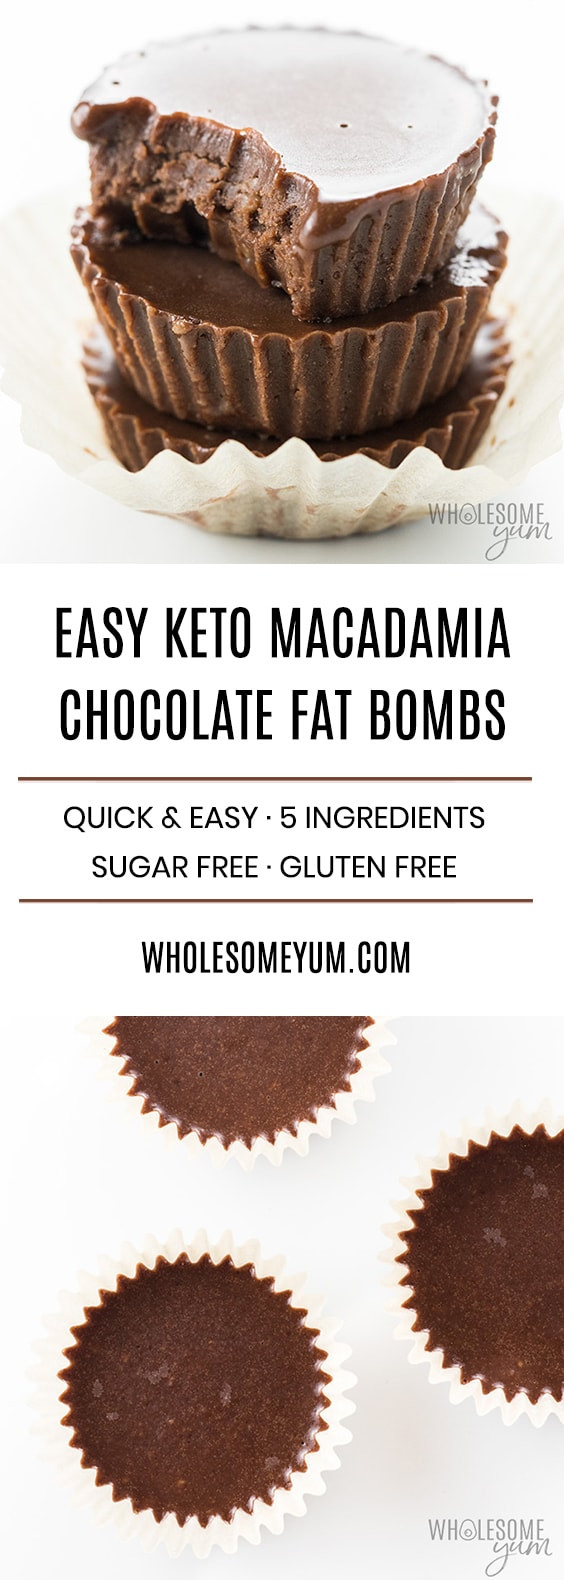 Keto Diet Recipes Fat Bombs
 Keto Fat Bomb Recipe Easy Chocolate Fat Bombs with